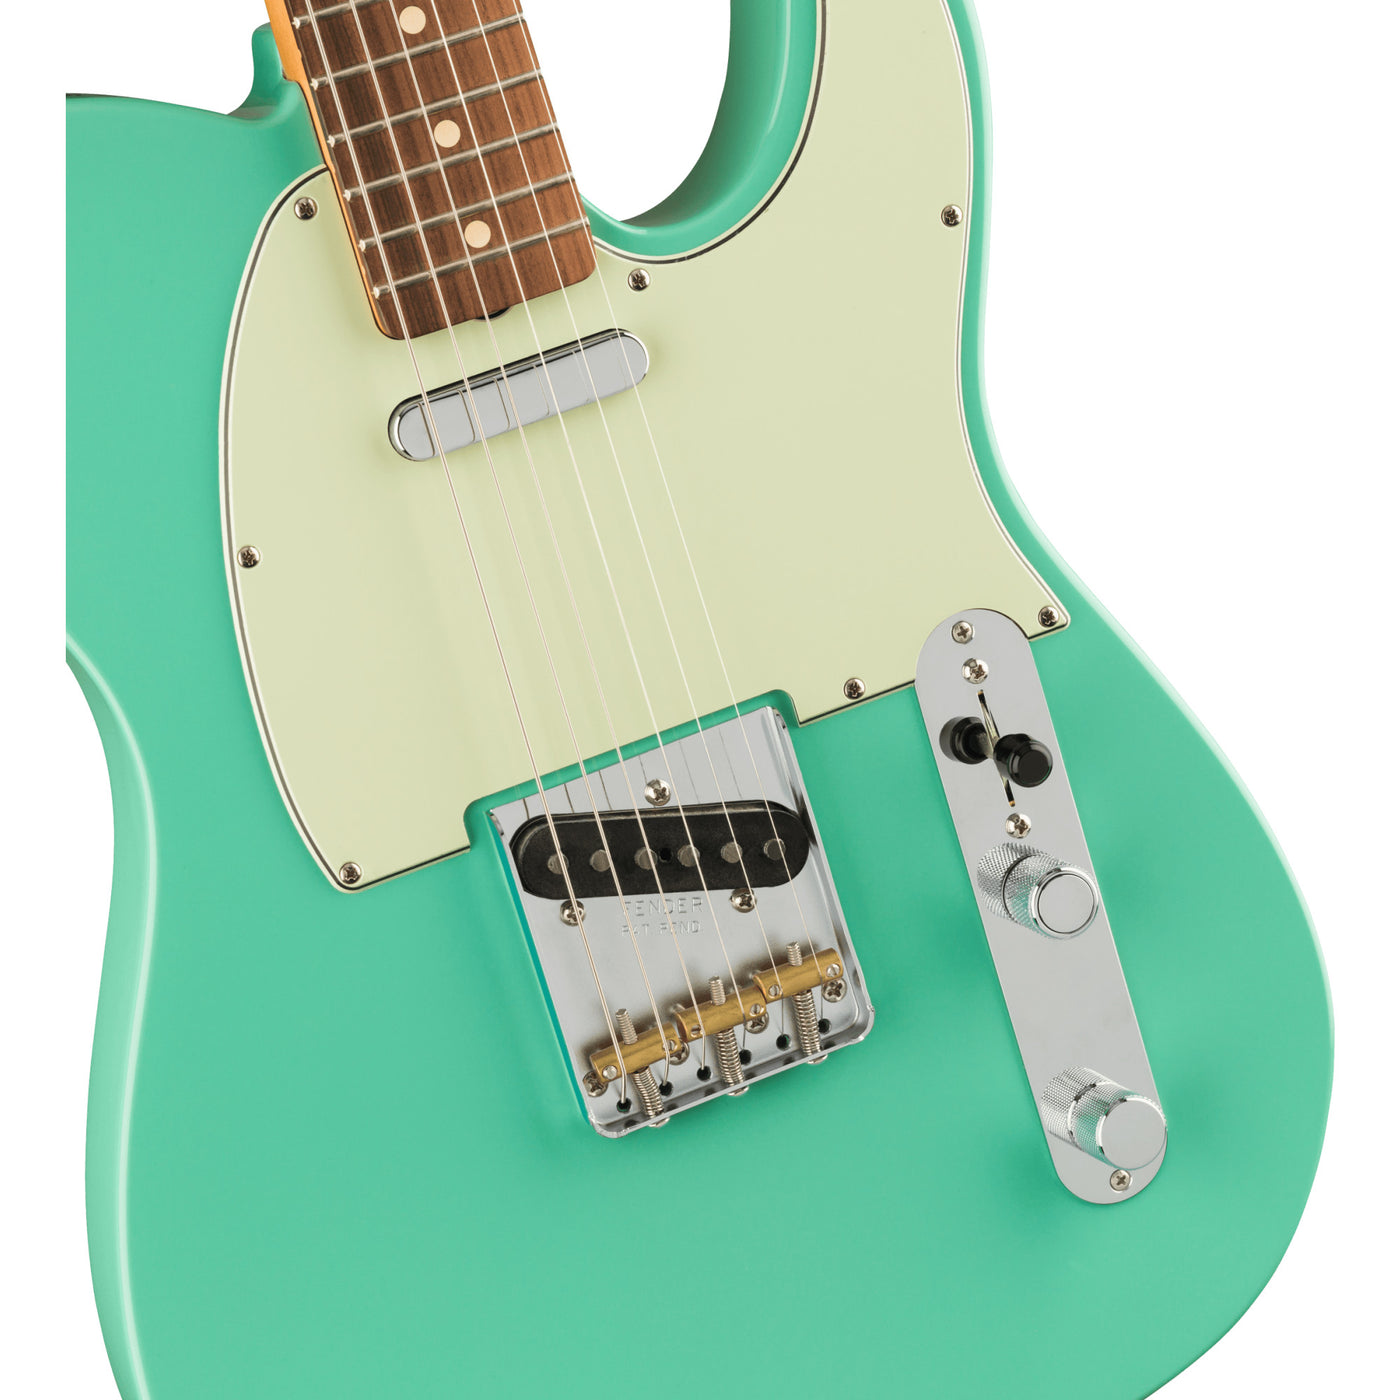 Fender Vintera '60s Telecaster Modified Electric Guitar, Seafoam Green (0149893373)